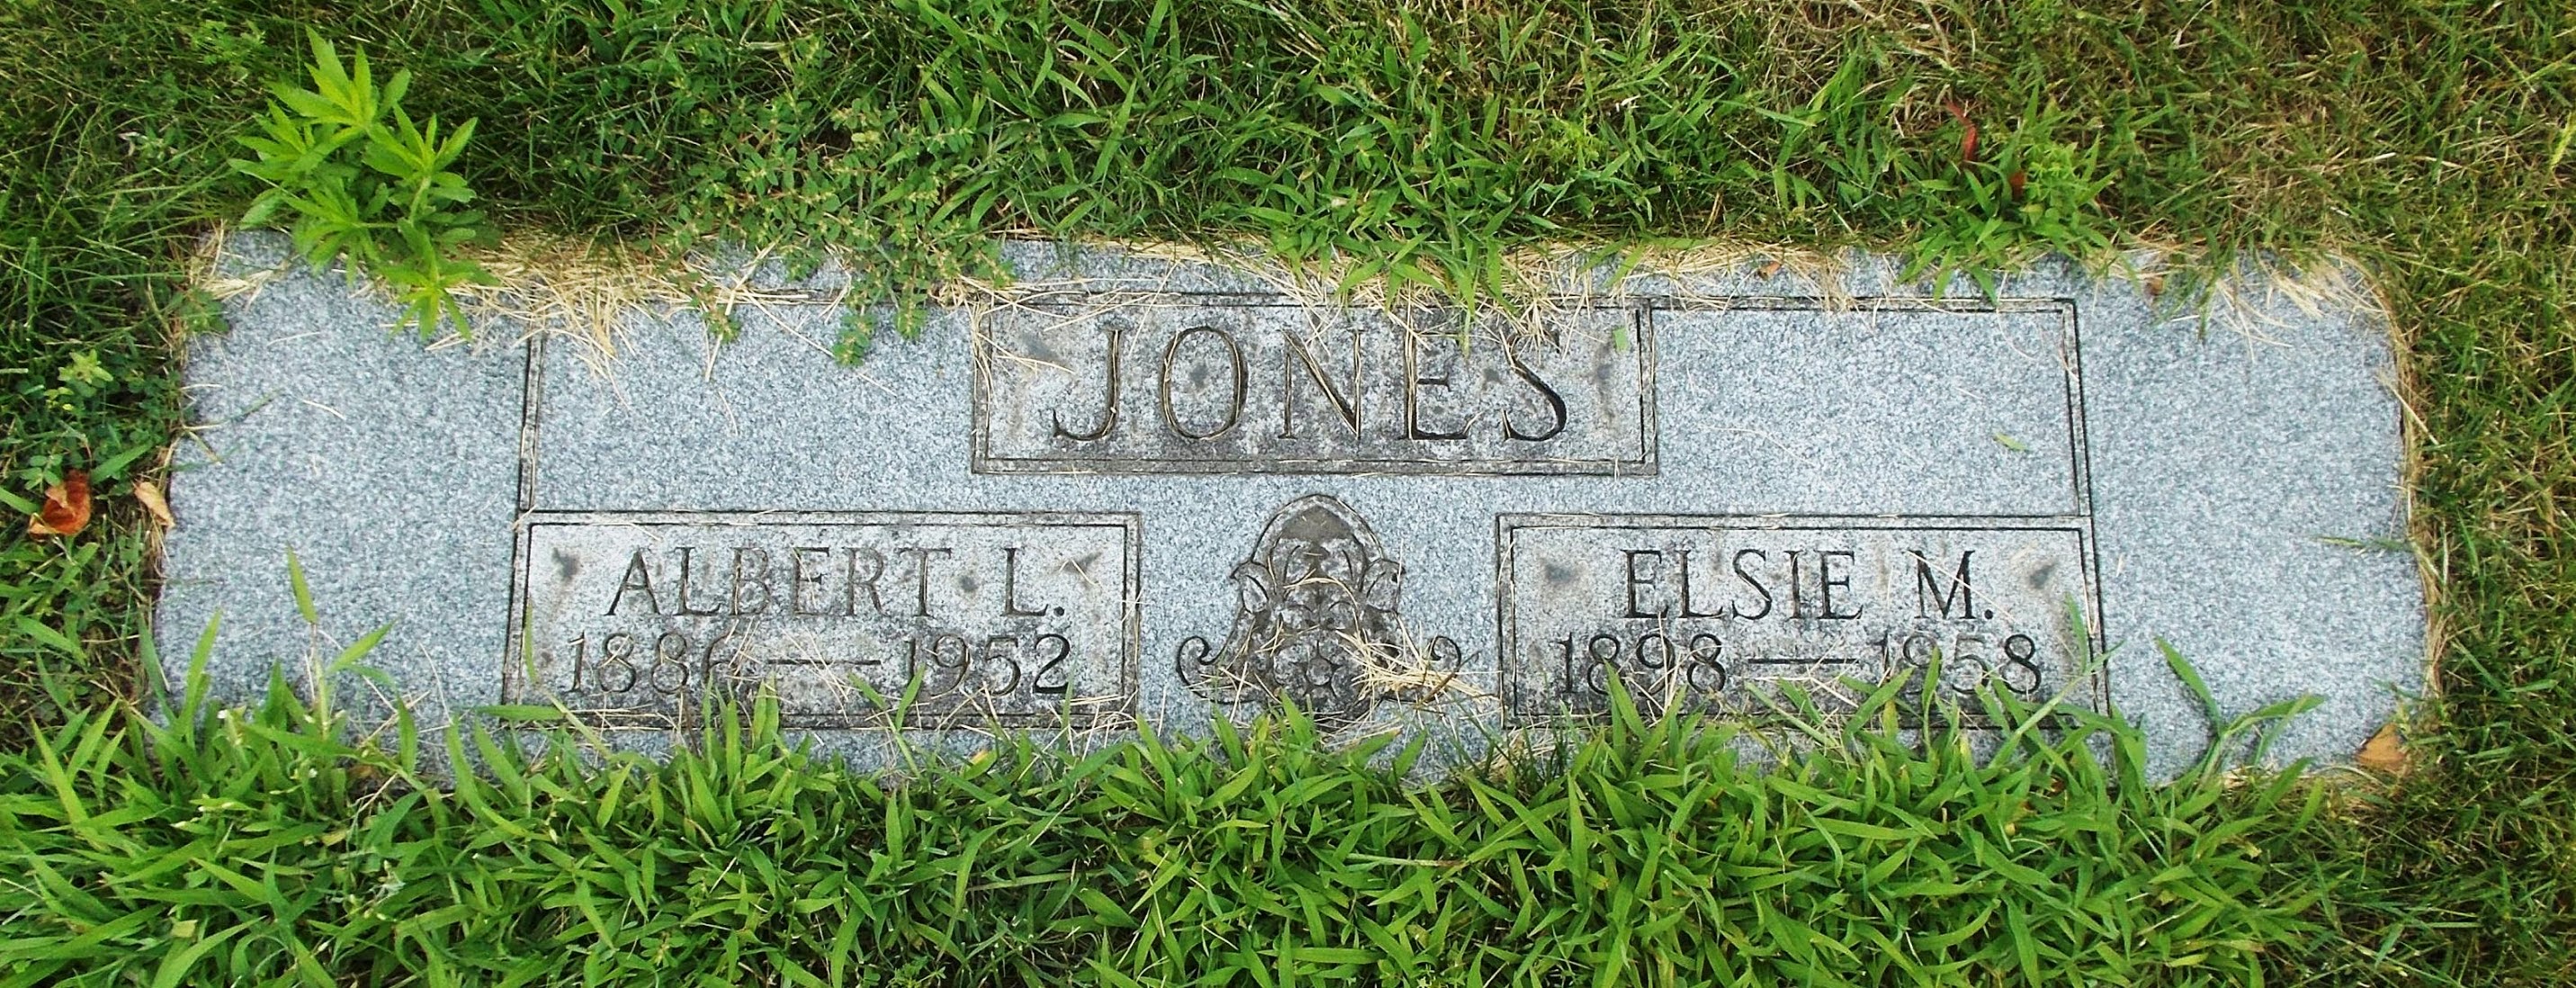 Elsie M Jones